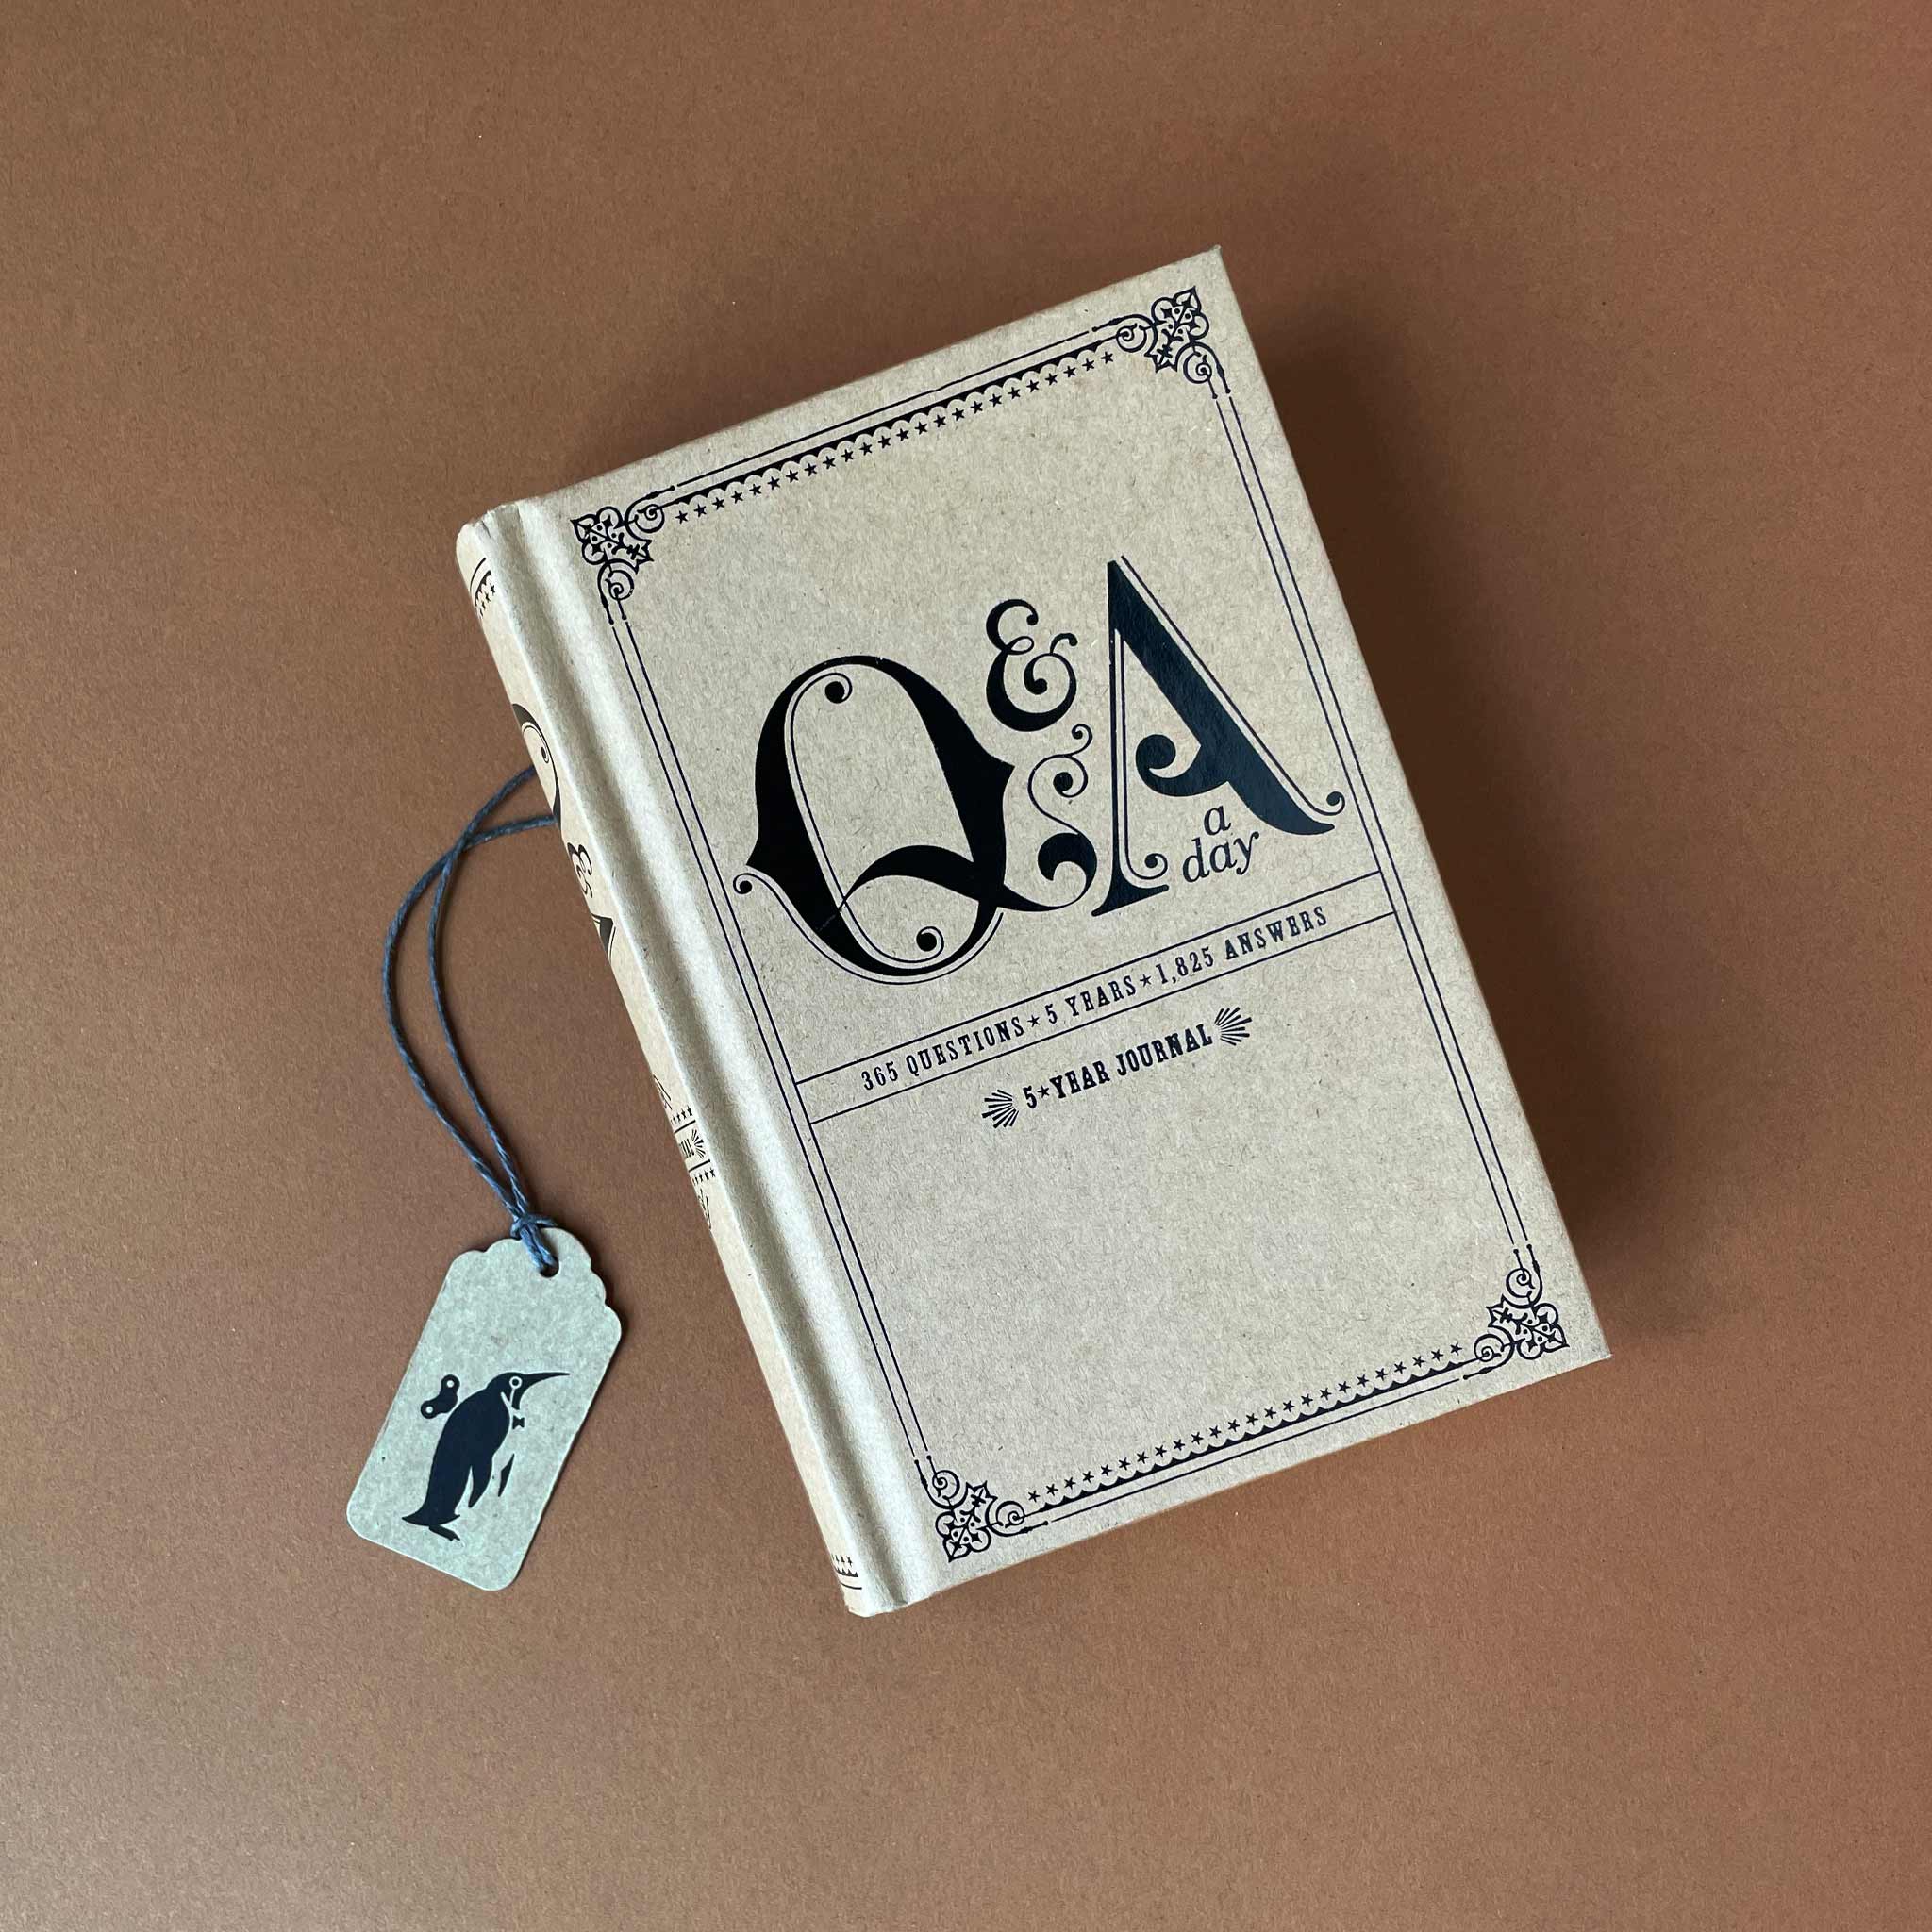 Q&A a Day: A 5 Year Journal